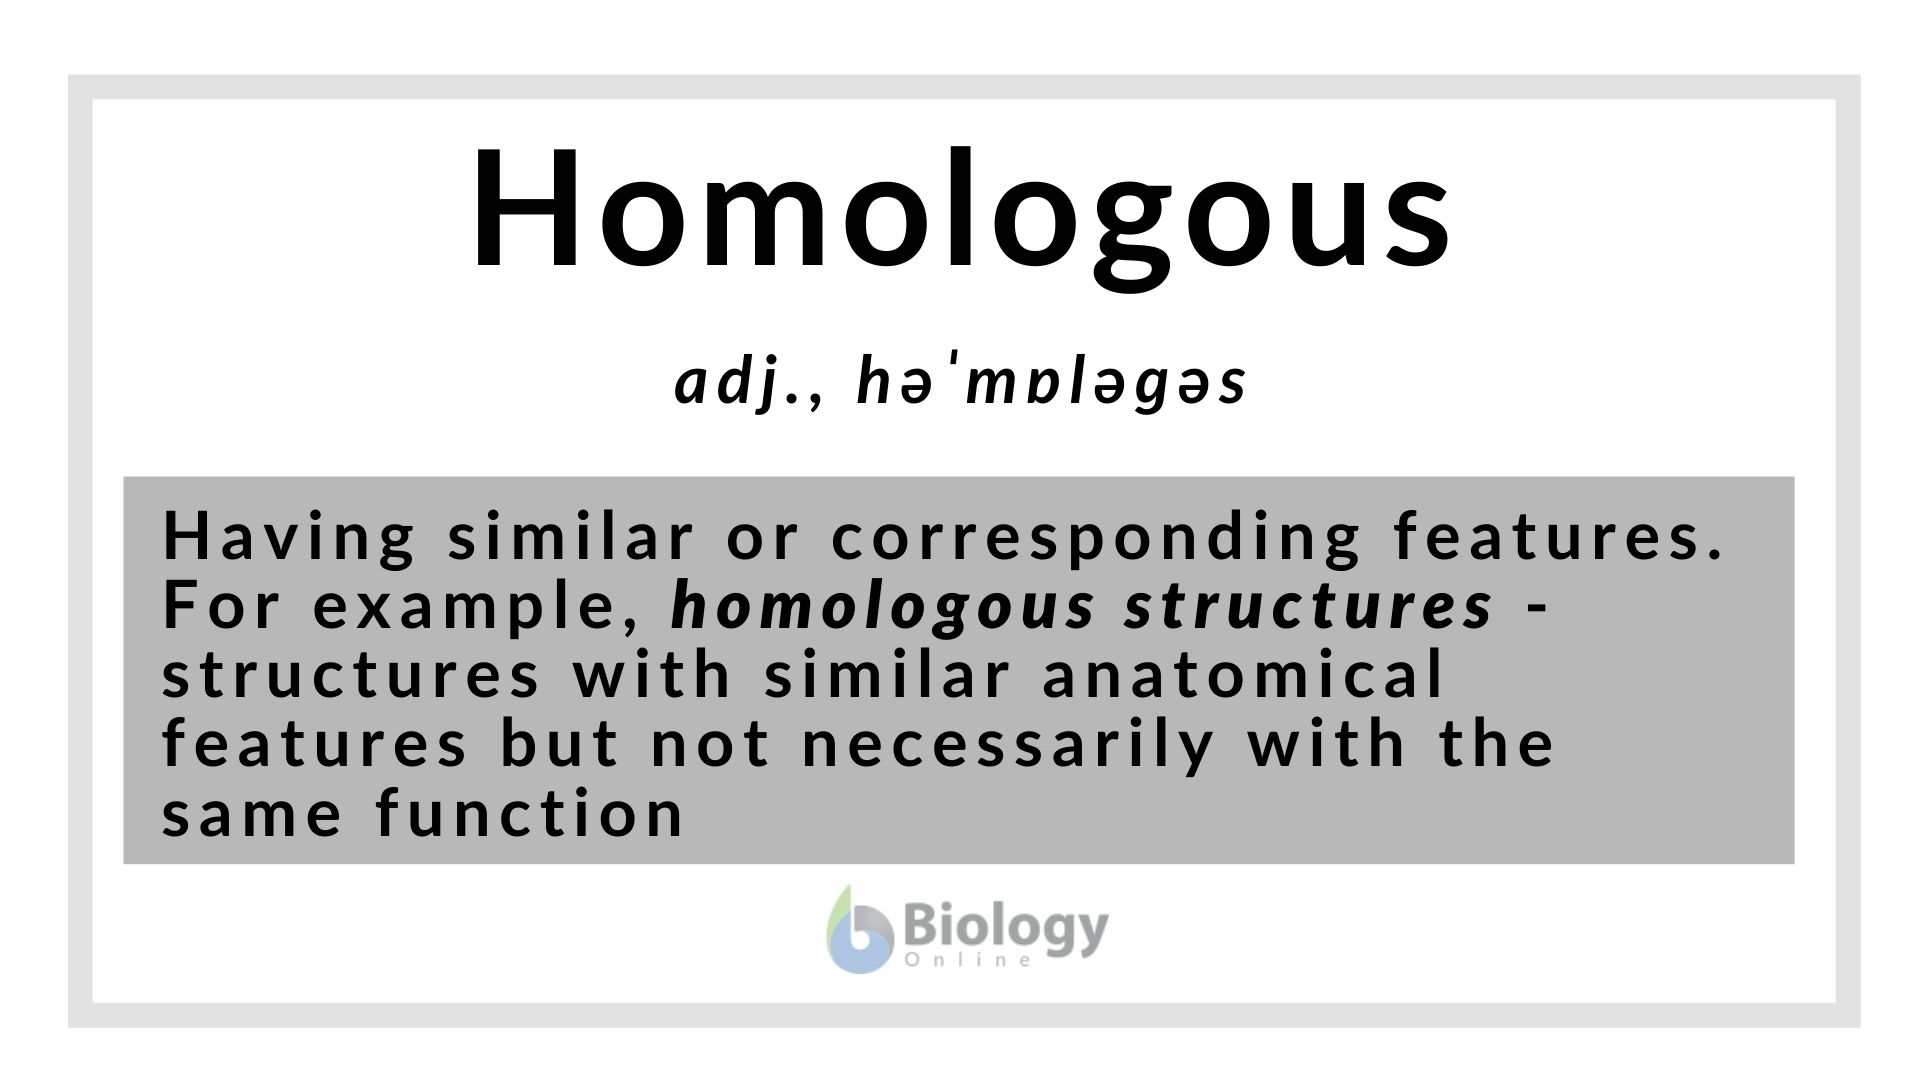 Heterologous meaning